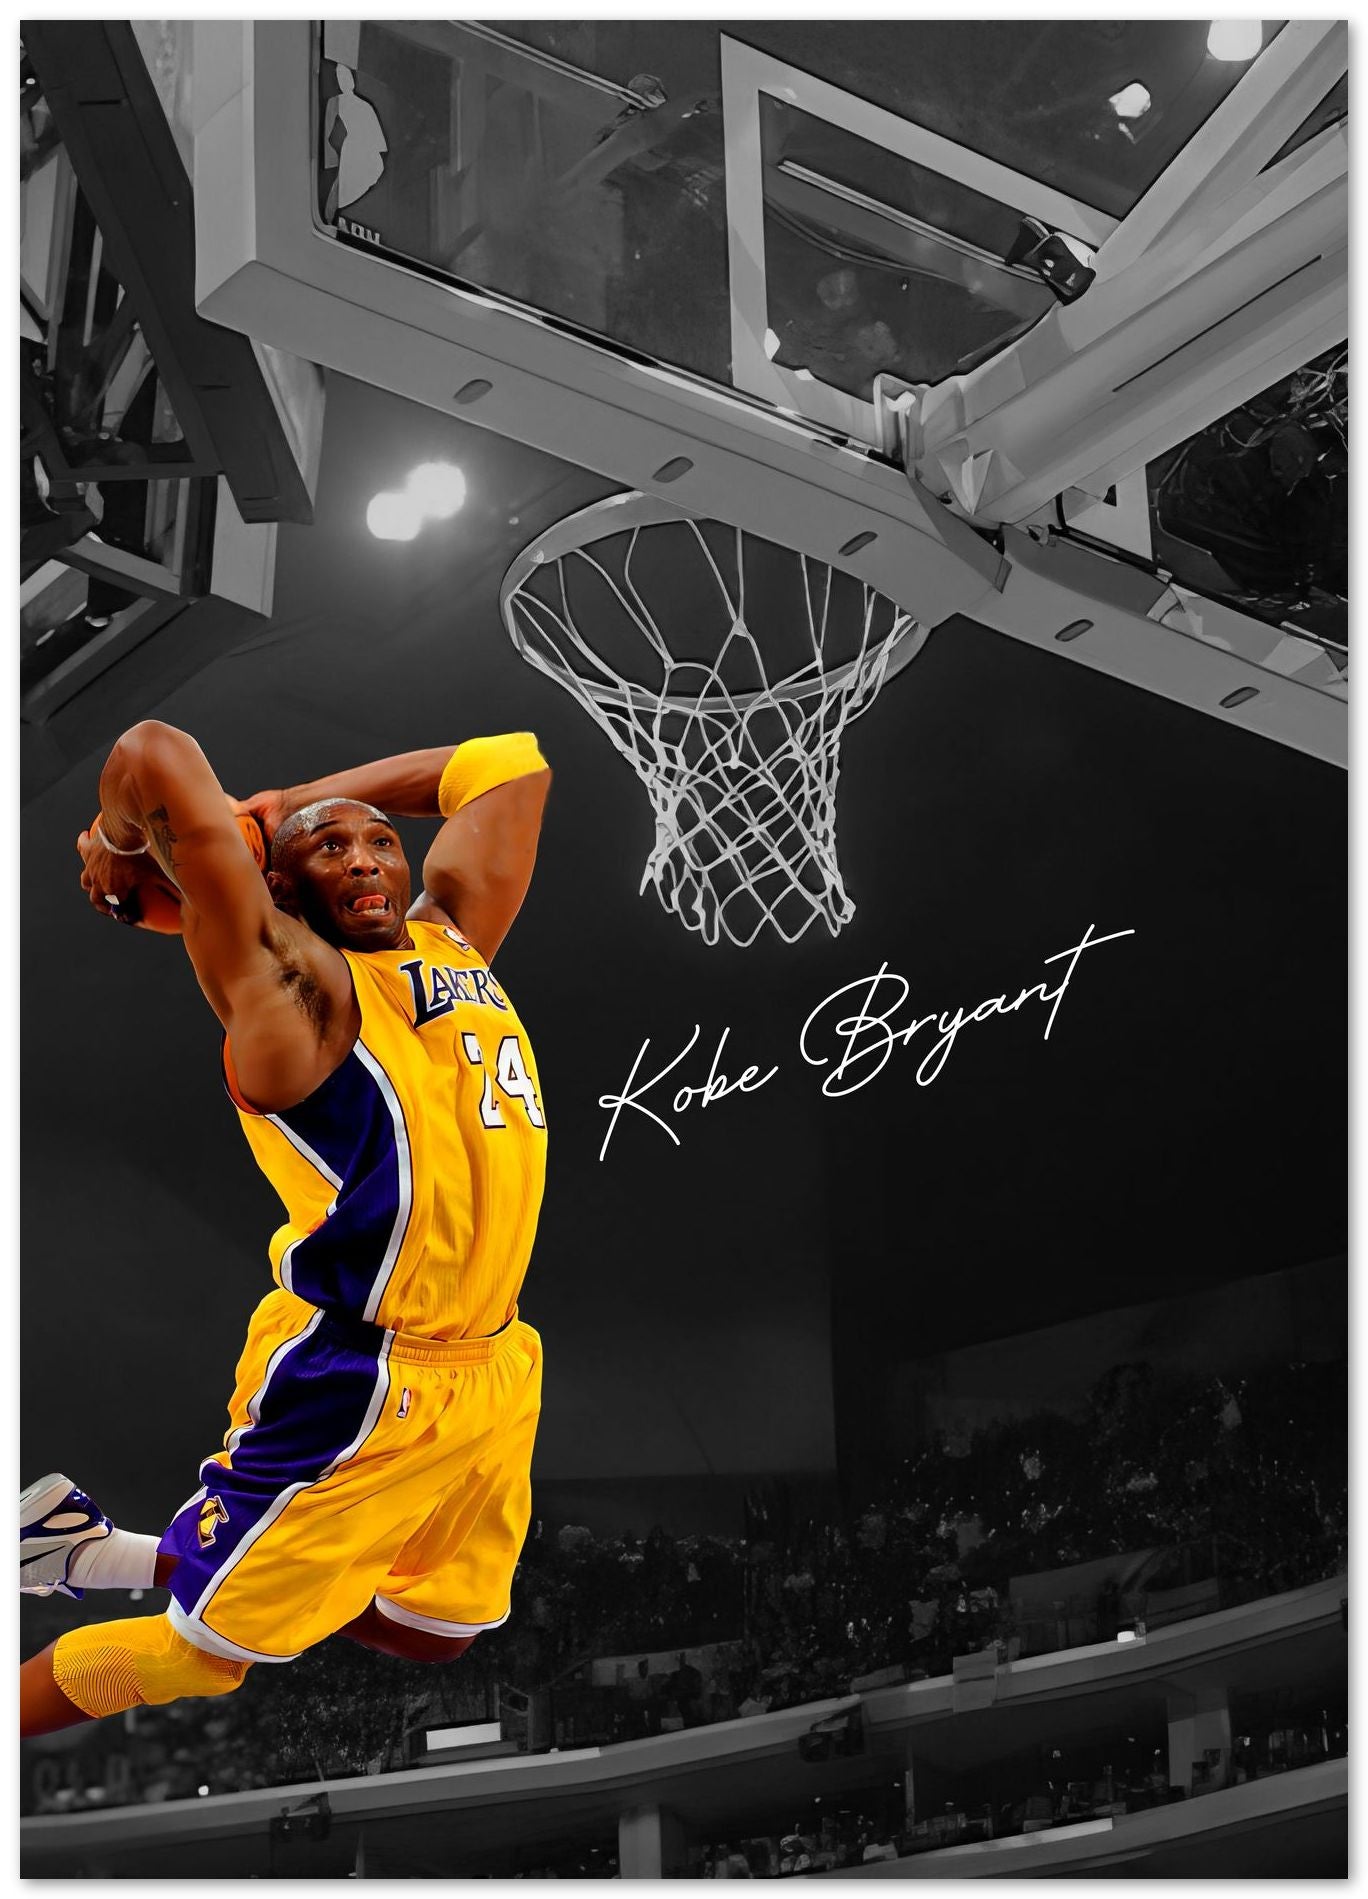 Kobe Bryant 13 - @MiracleCreative